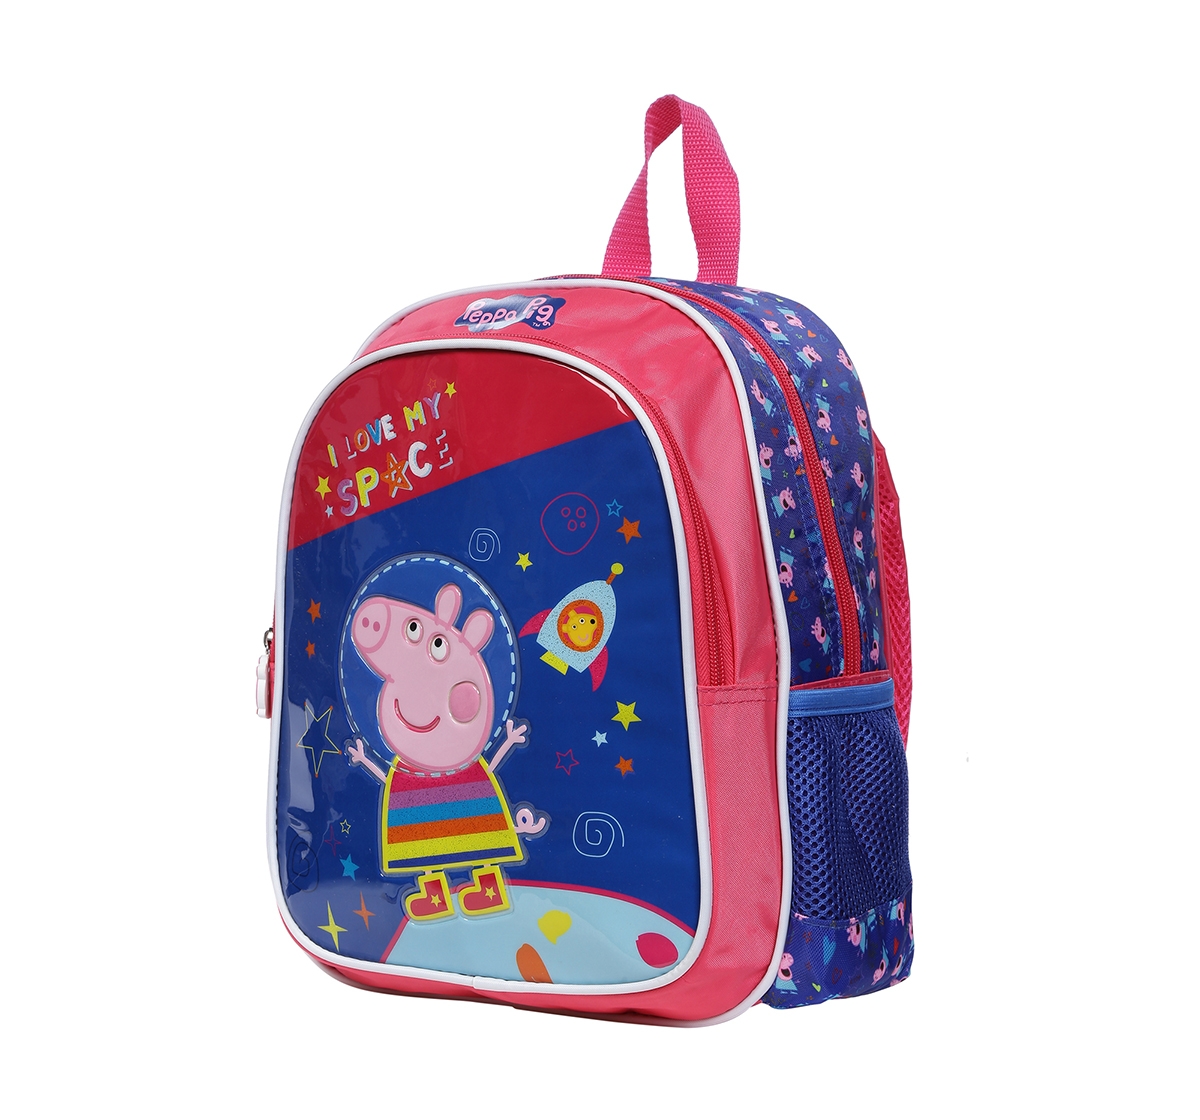 Peppa Pig |  Peppa Pig I Love My Space 12 Backpack Bags for Kids age 3Y+  2